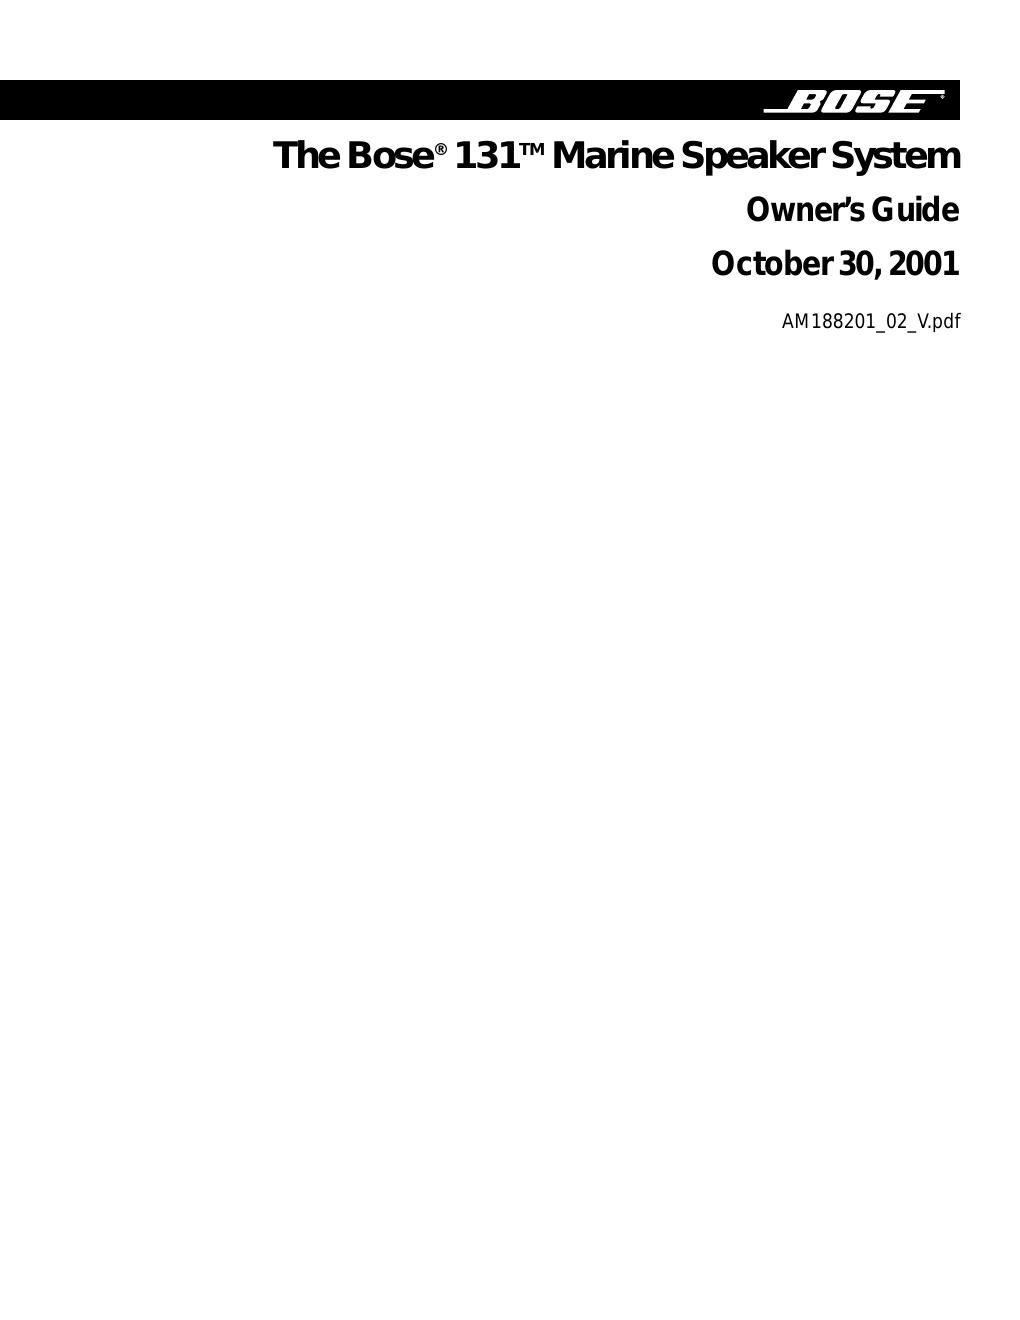 bose marine speaker 131 owners guide